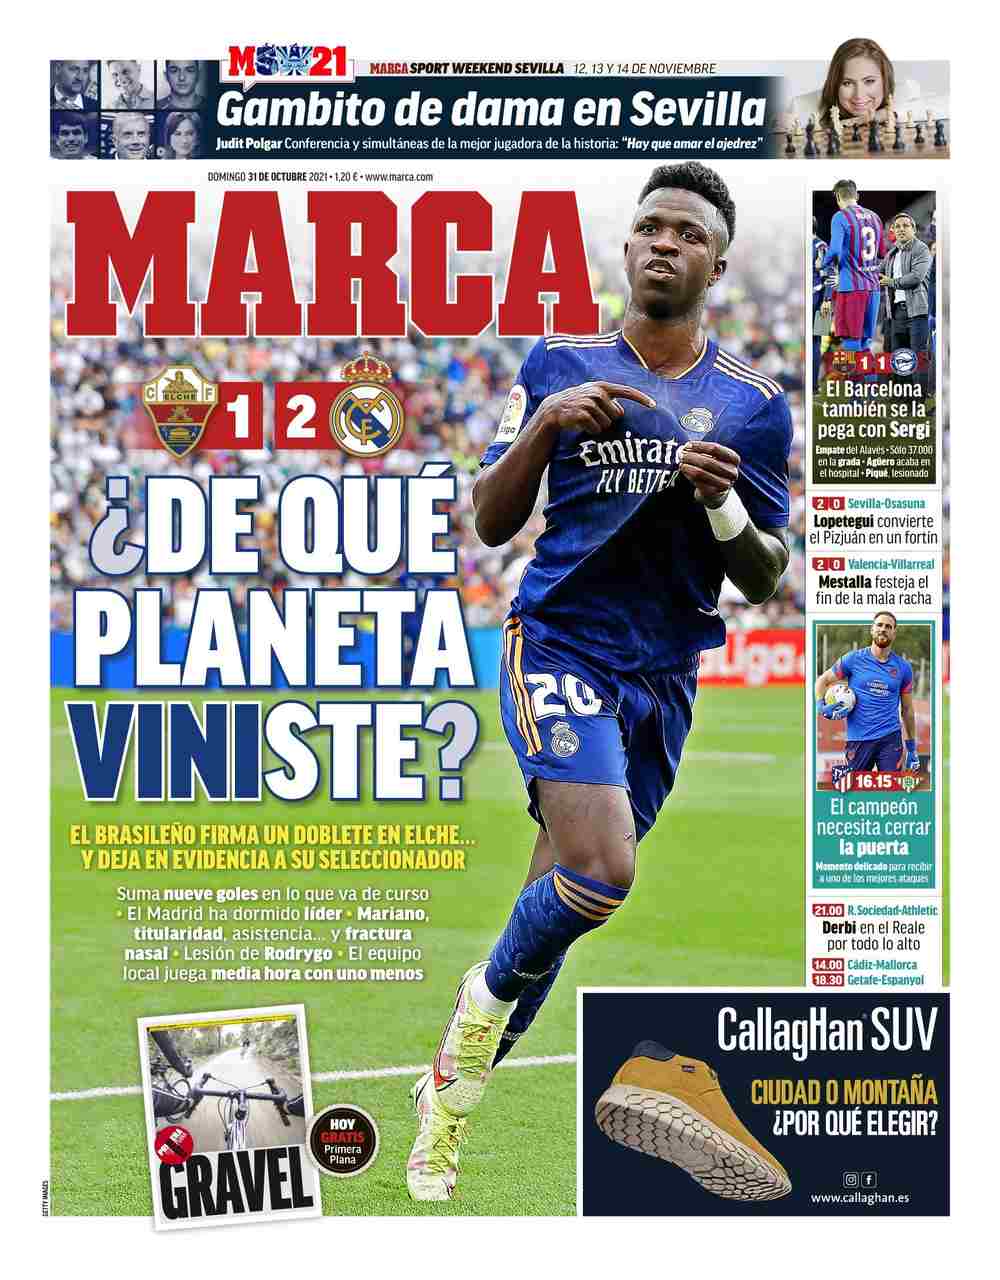 Capa do Marca com Vini Jr. - 31/10/2021